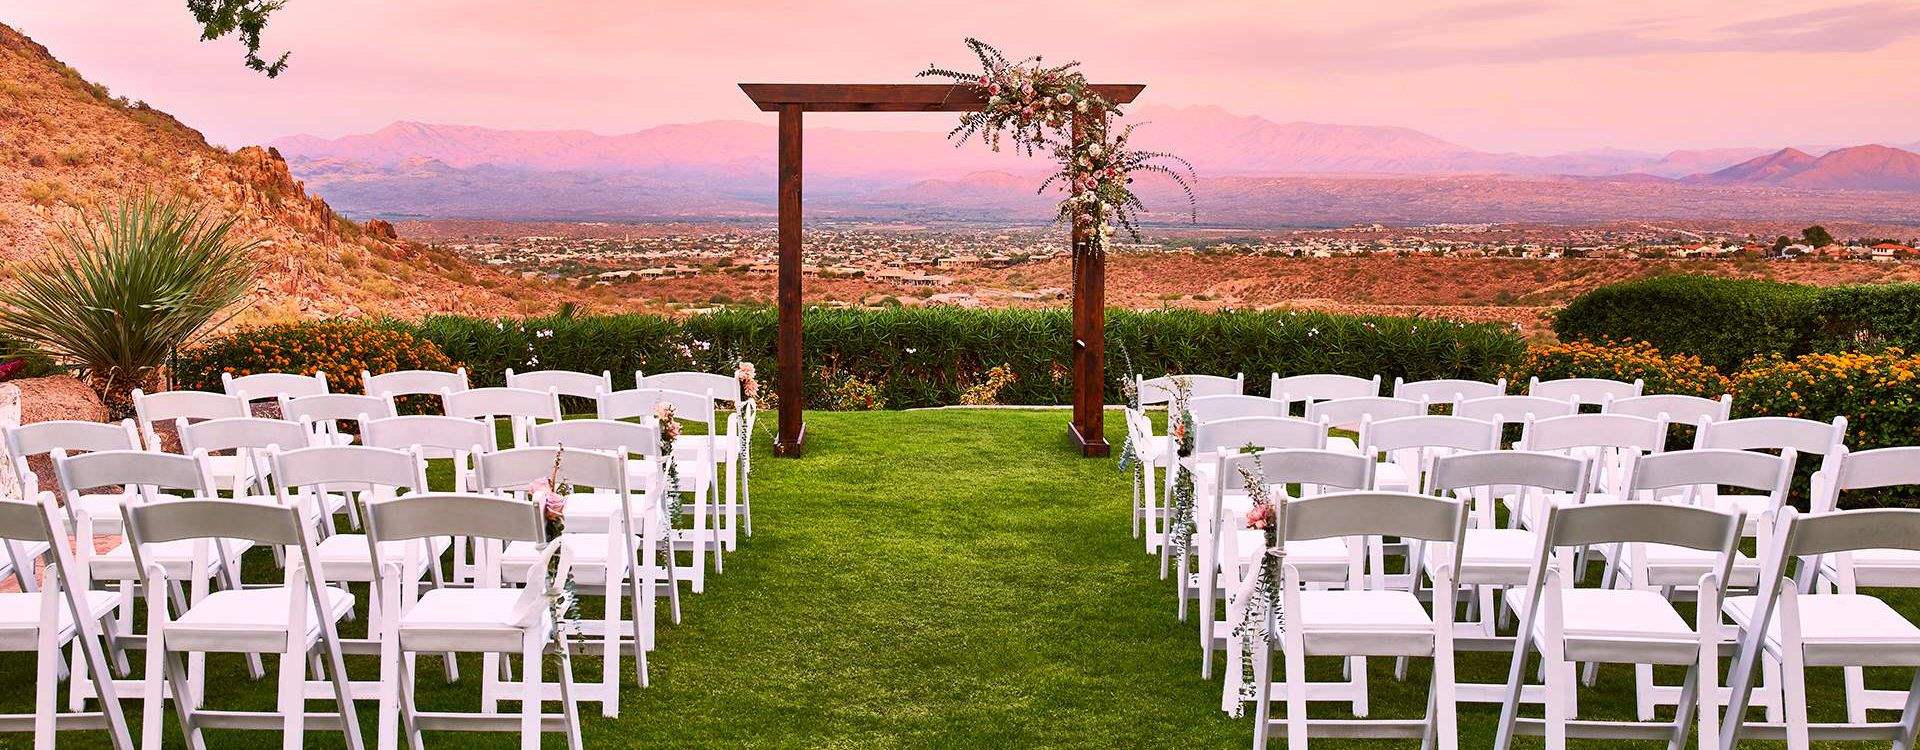 Best Wedding Venues In Scottsdale  The ultimate guide 